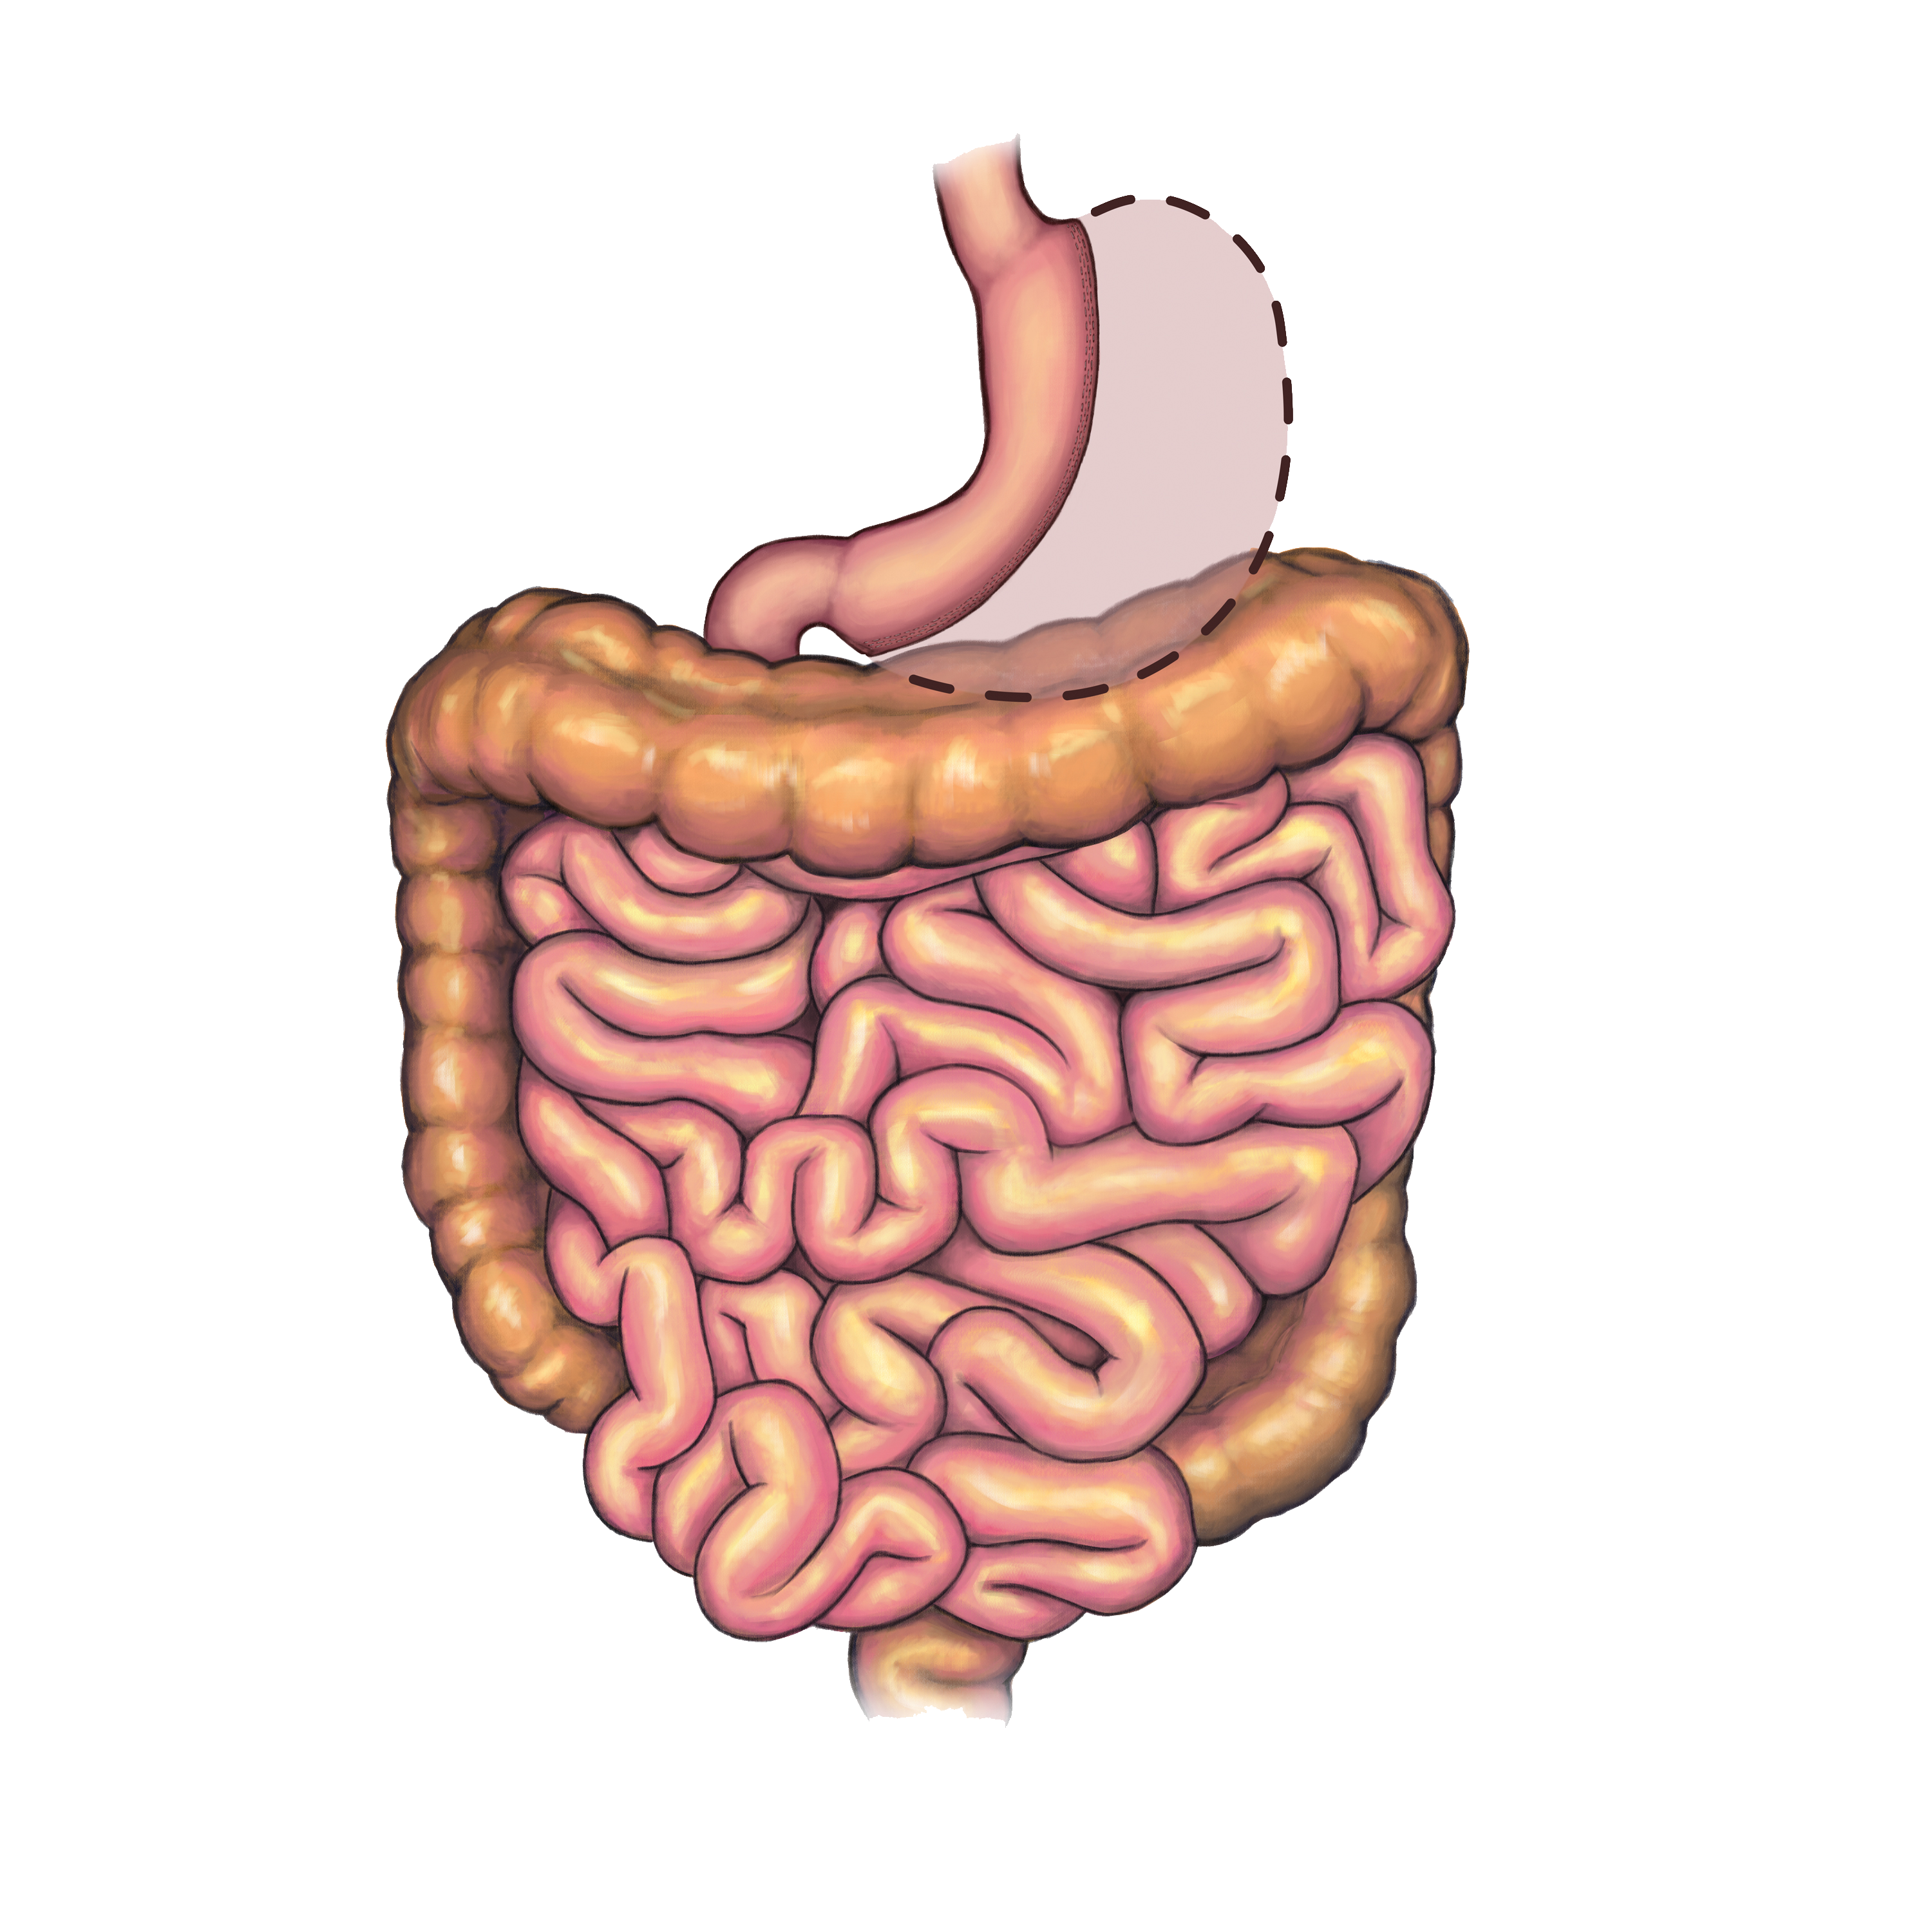 stomach clipart stomach anatomy